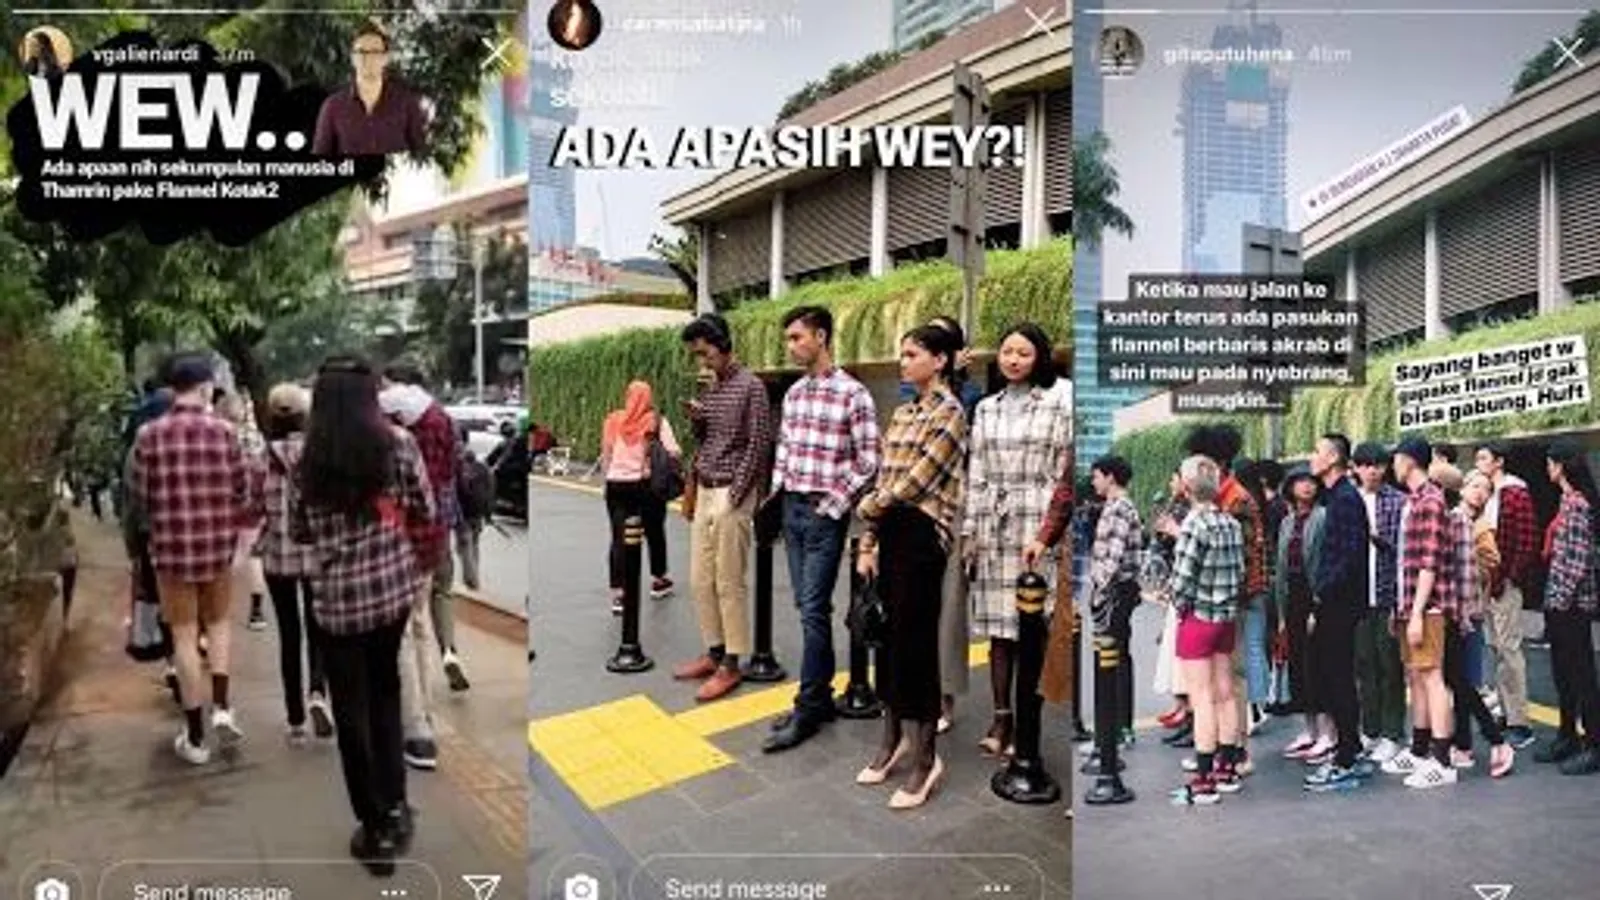 Nggak Cuma “Menjajah” Jakarta, Pasukan Flannel Juga Trending di Medsos